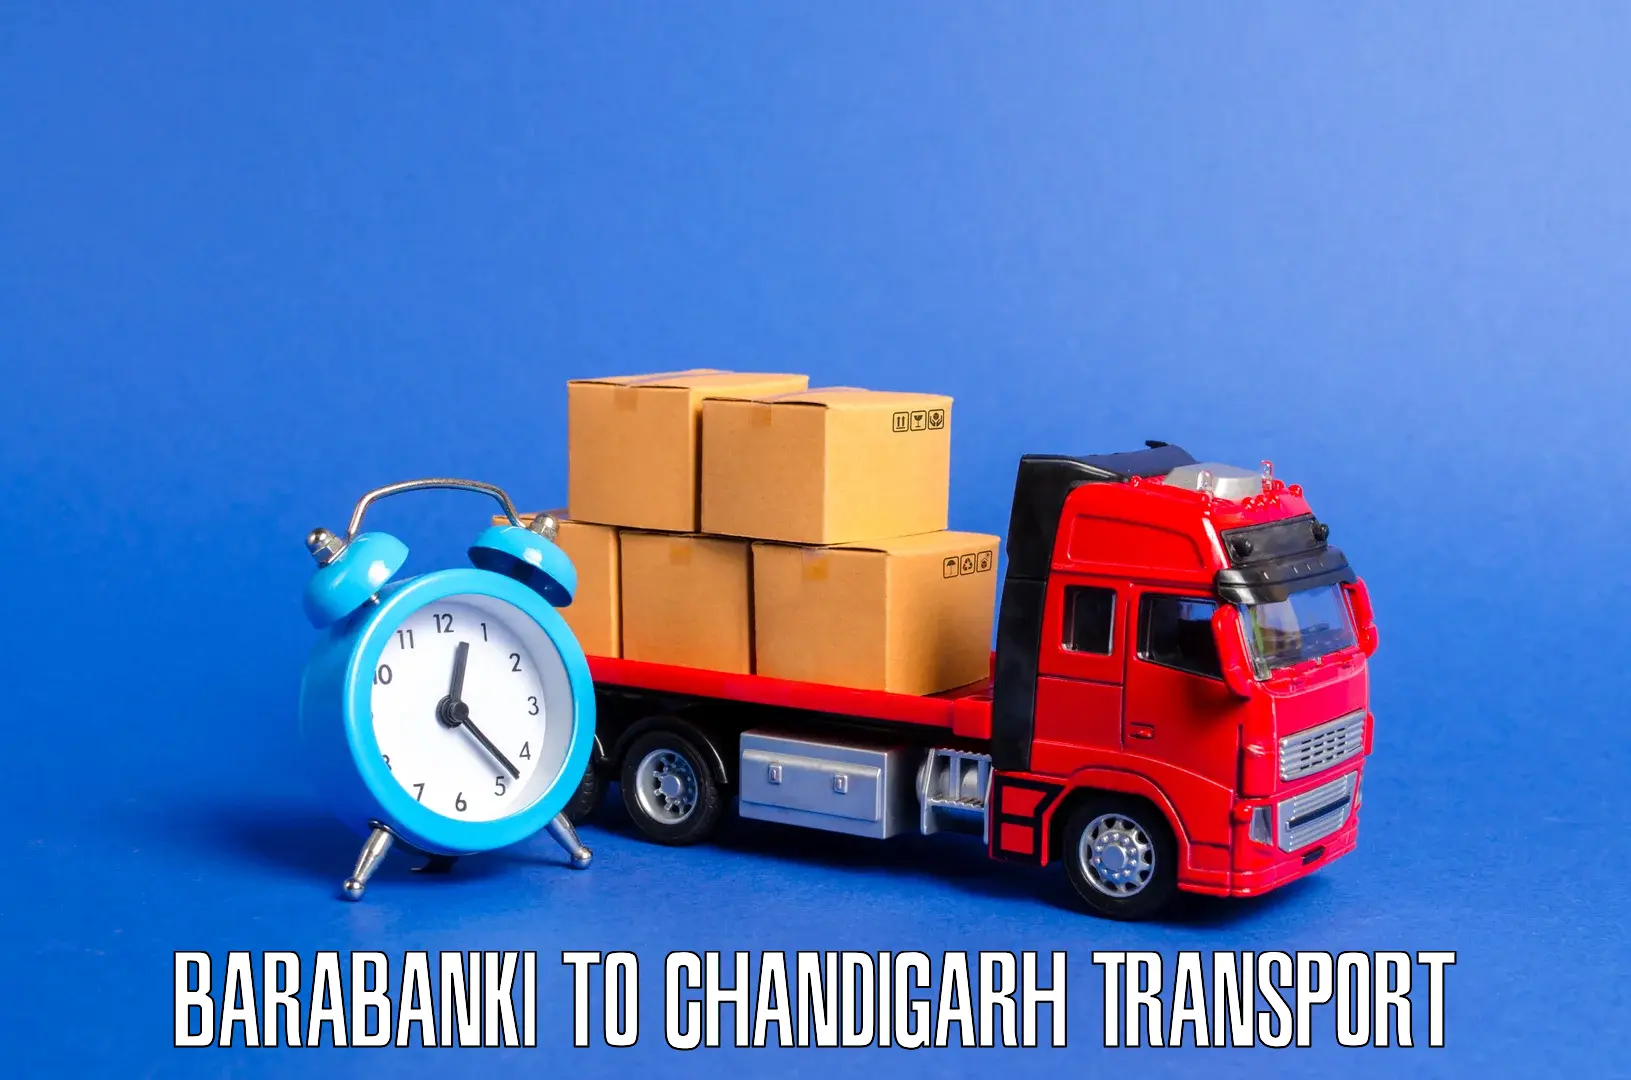 Delivery service Barabanki to Chandigarh